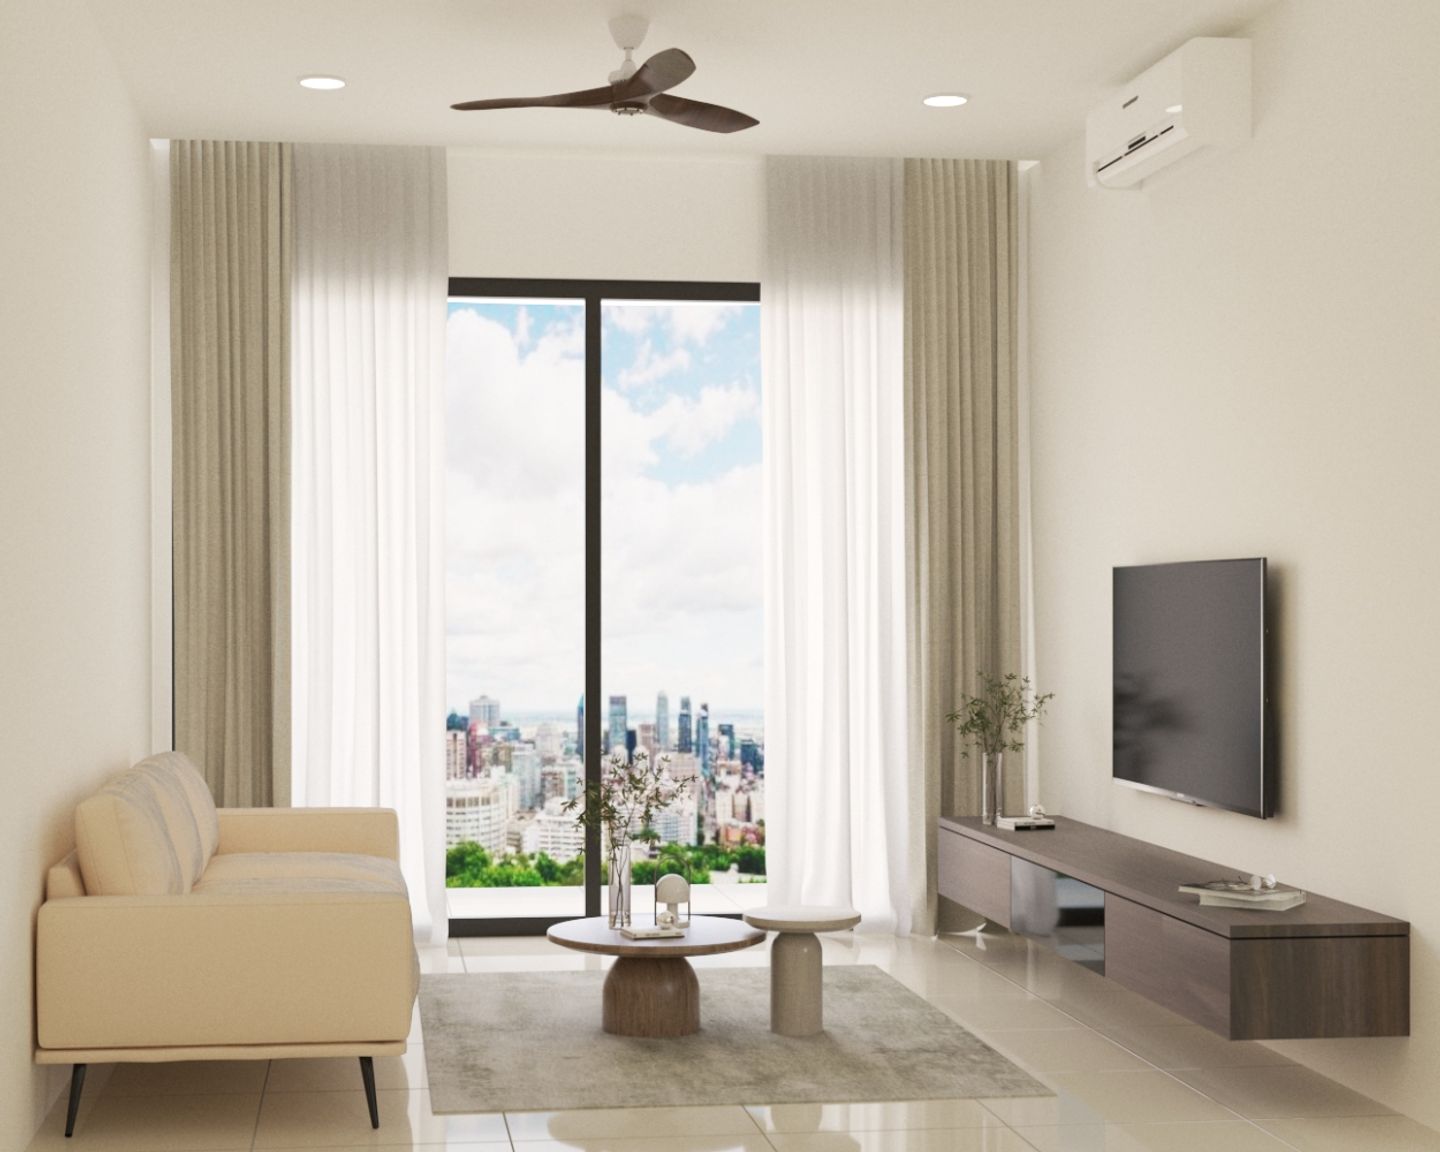 Living Room Design With Beige Sofa And Dark Wood TV Unit Design - Livspace